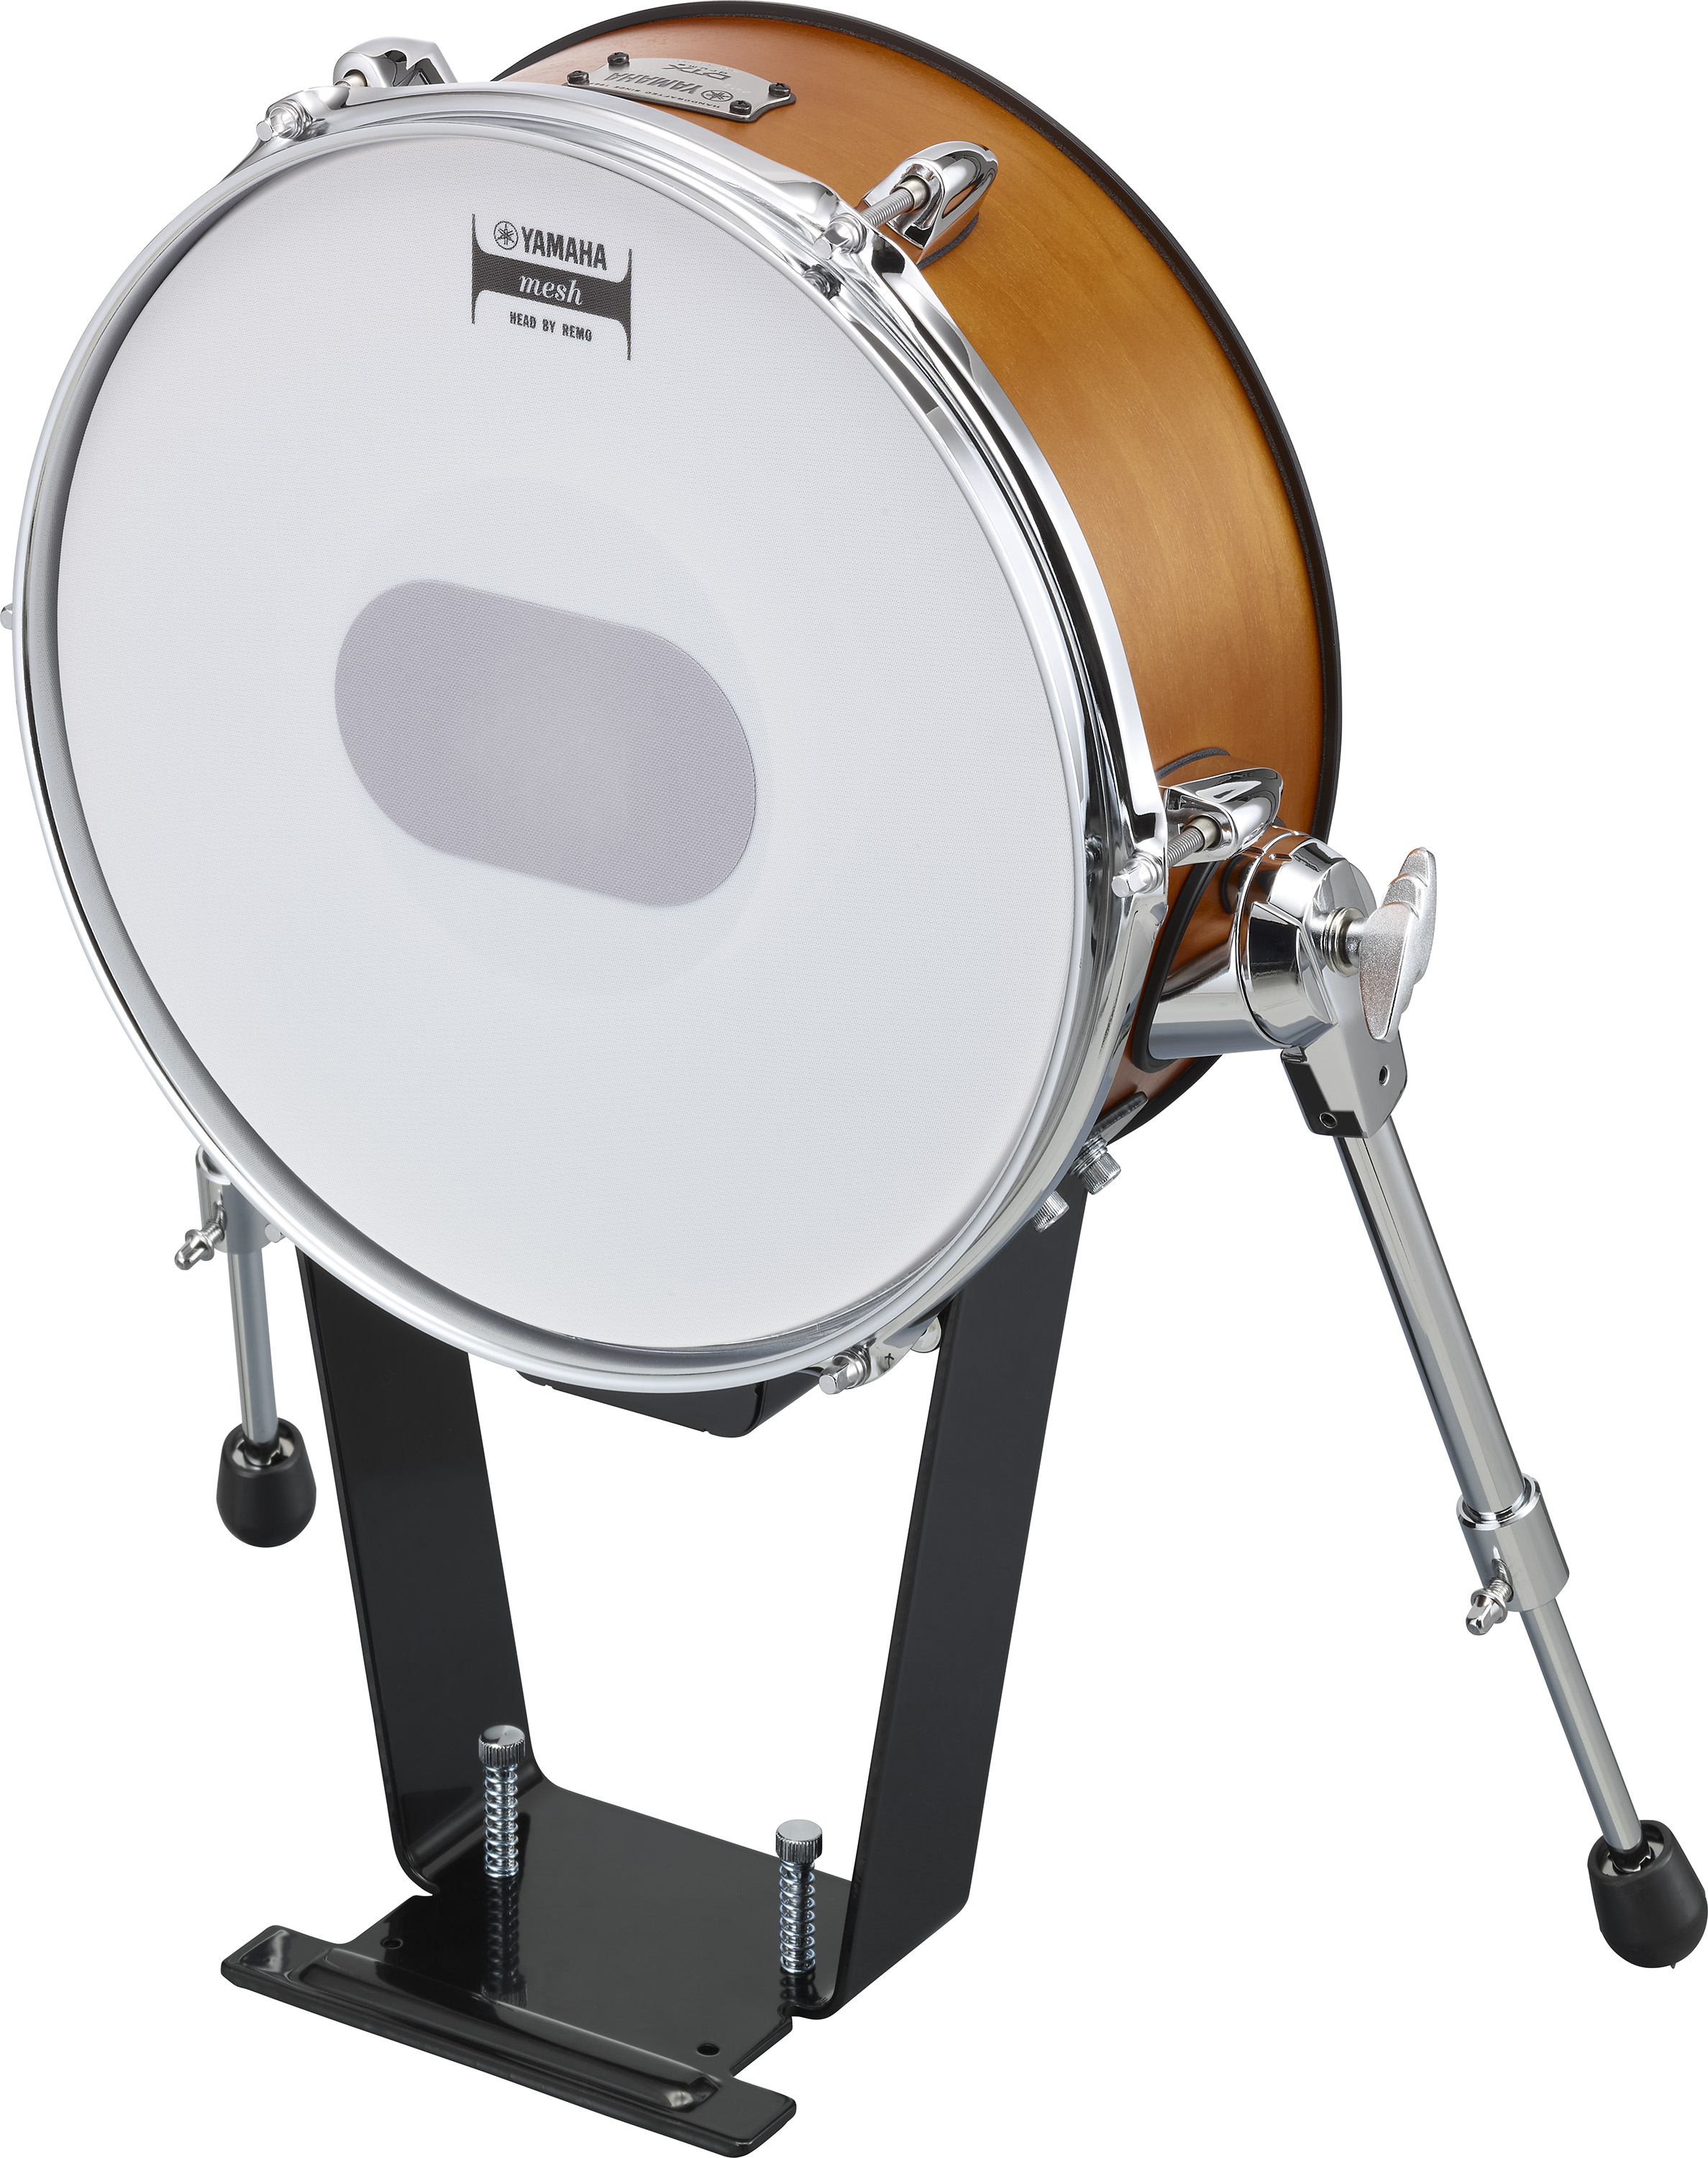 Yamaha Dtx10-kx Electronic Drum Kit Real Wood - Batería electrónica completa - Variation 4